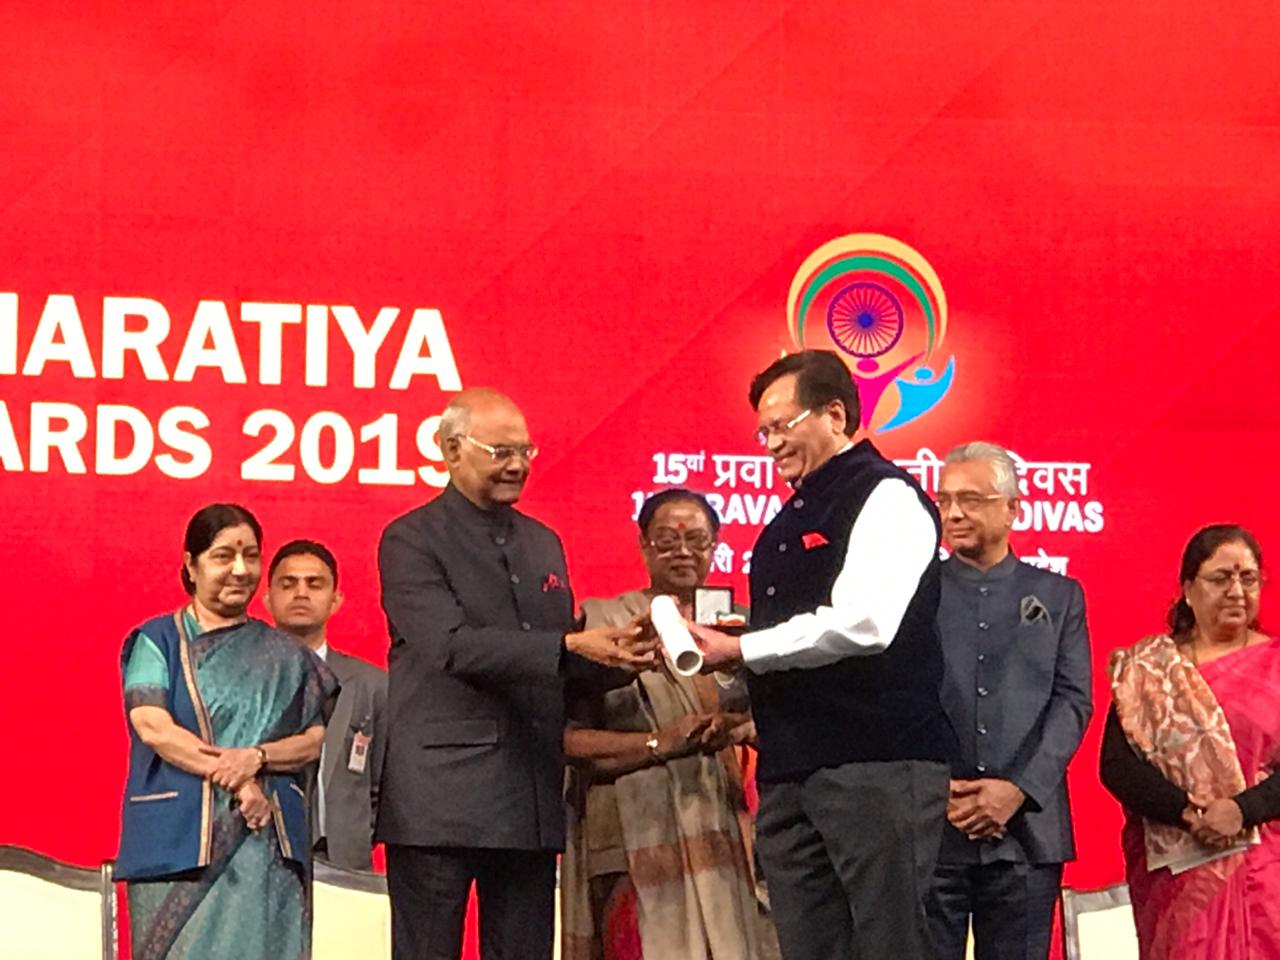 MSU Alumni Gitesh Desai awarded Pravasi Bharatiya Samman Award for 2019